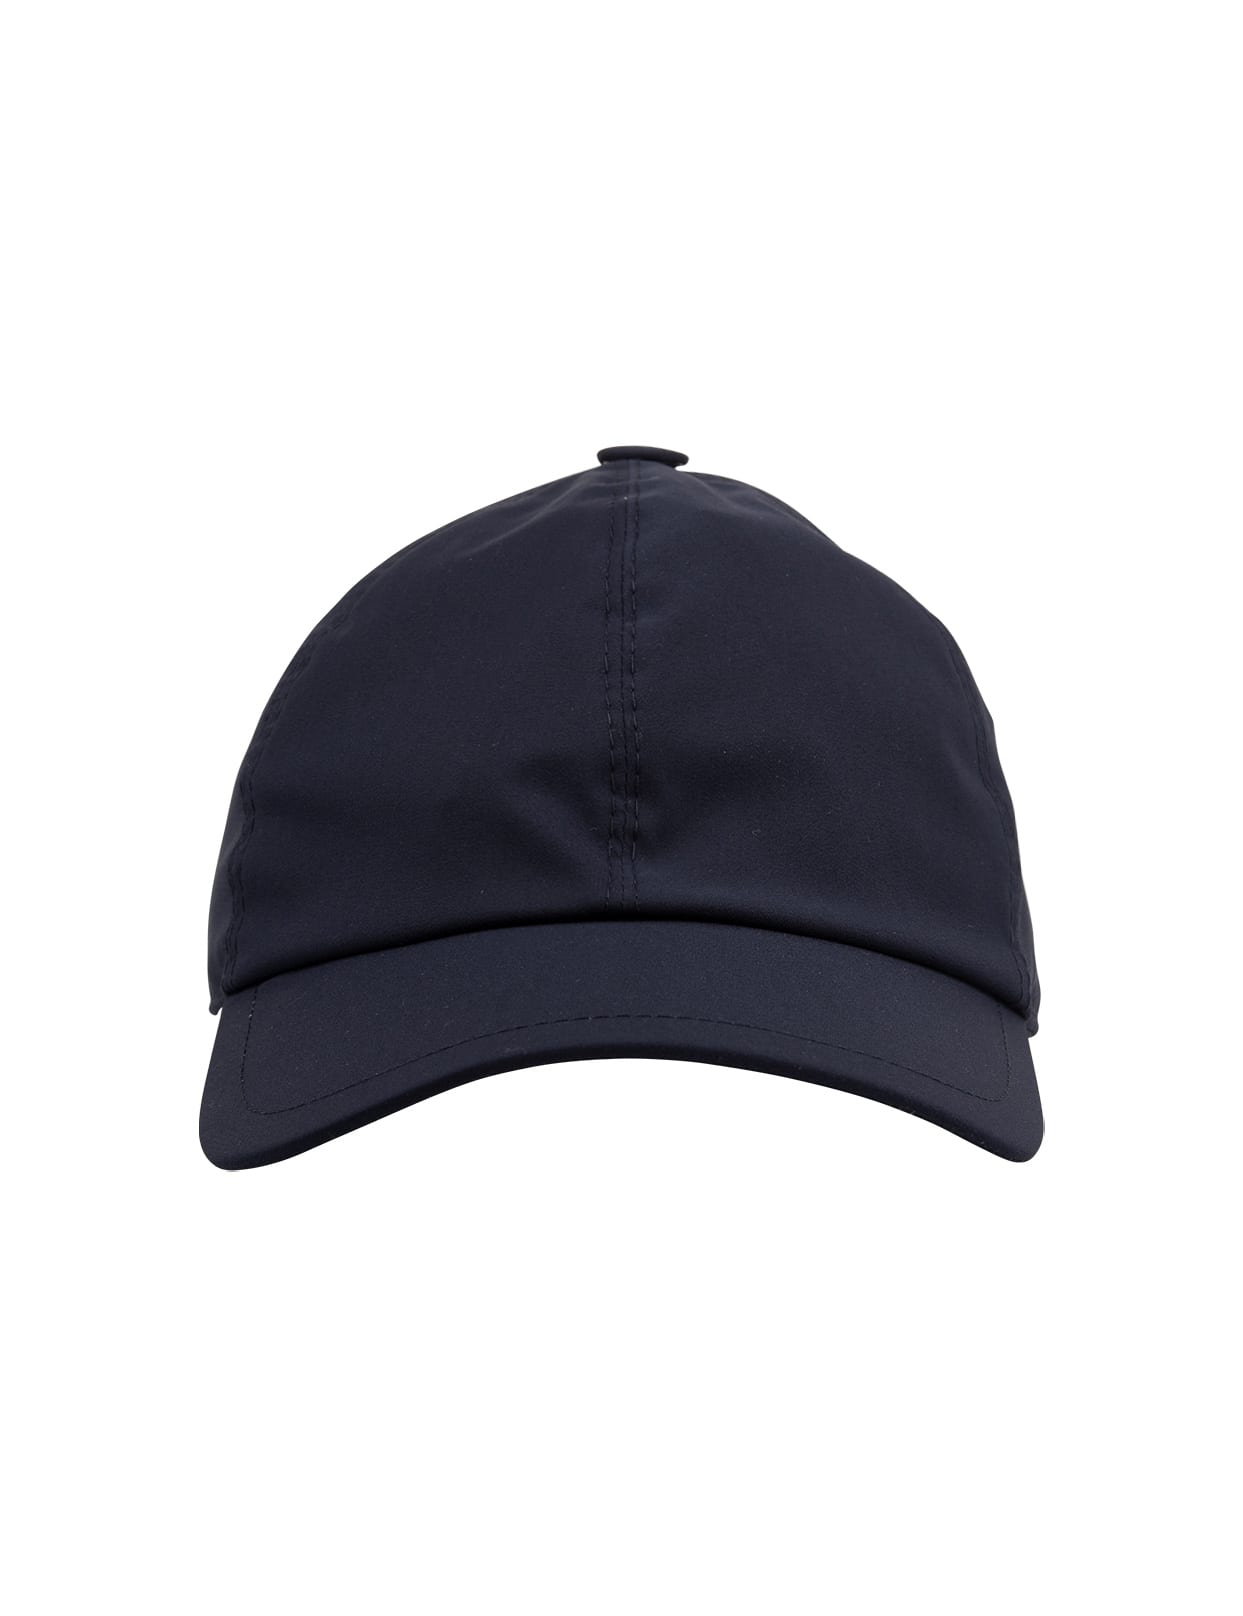 Shop Fedeli Man Navy Blue Technical Fabric Baseball Hat